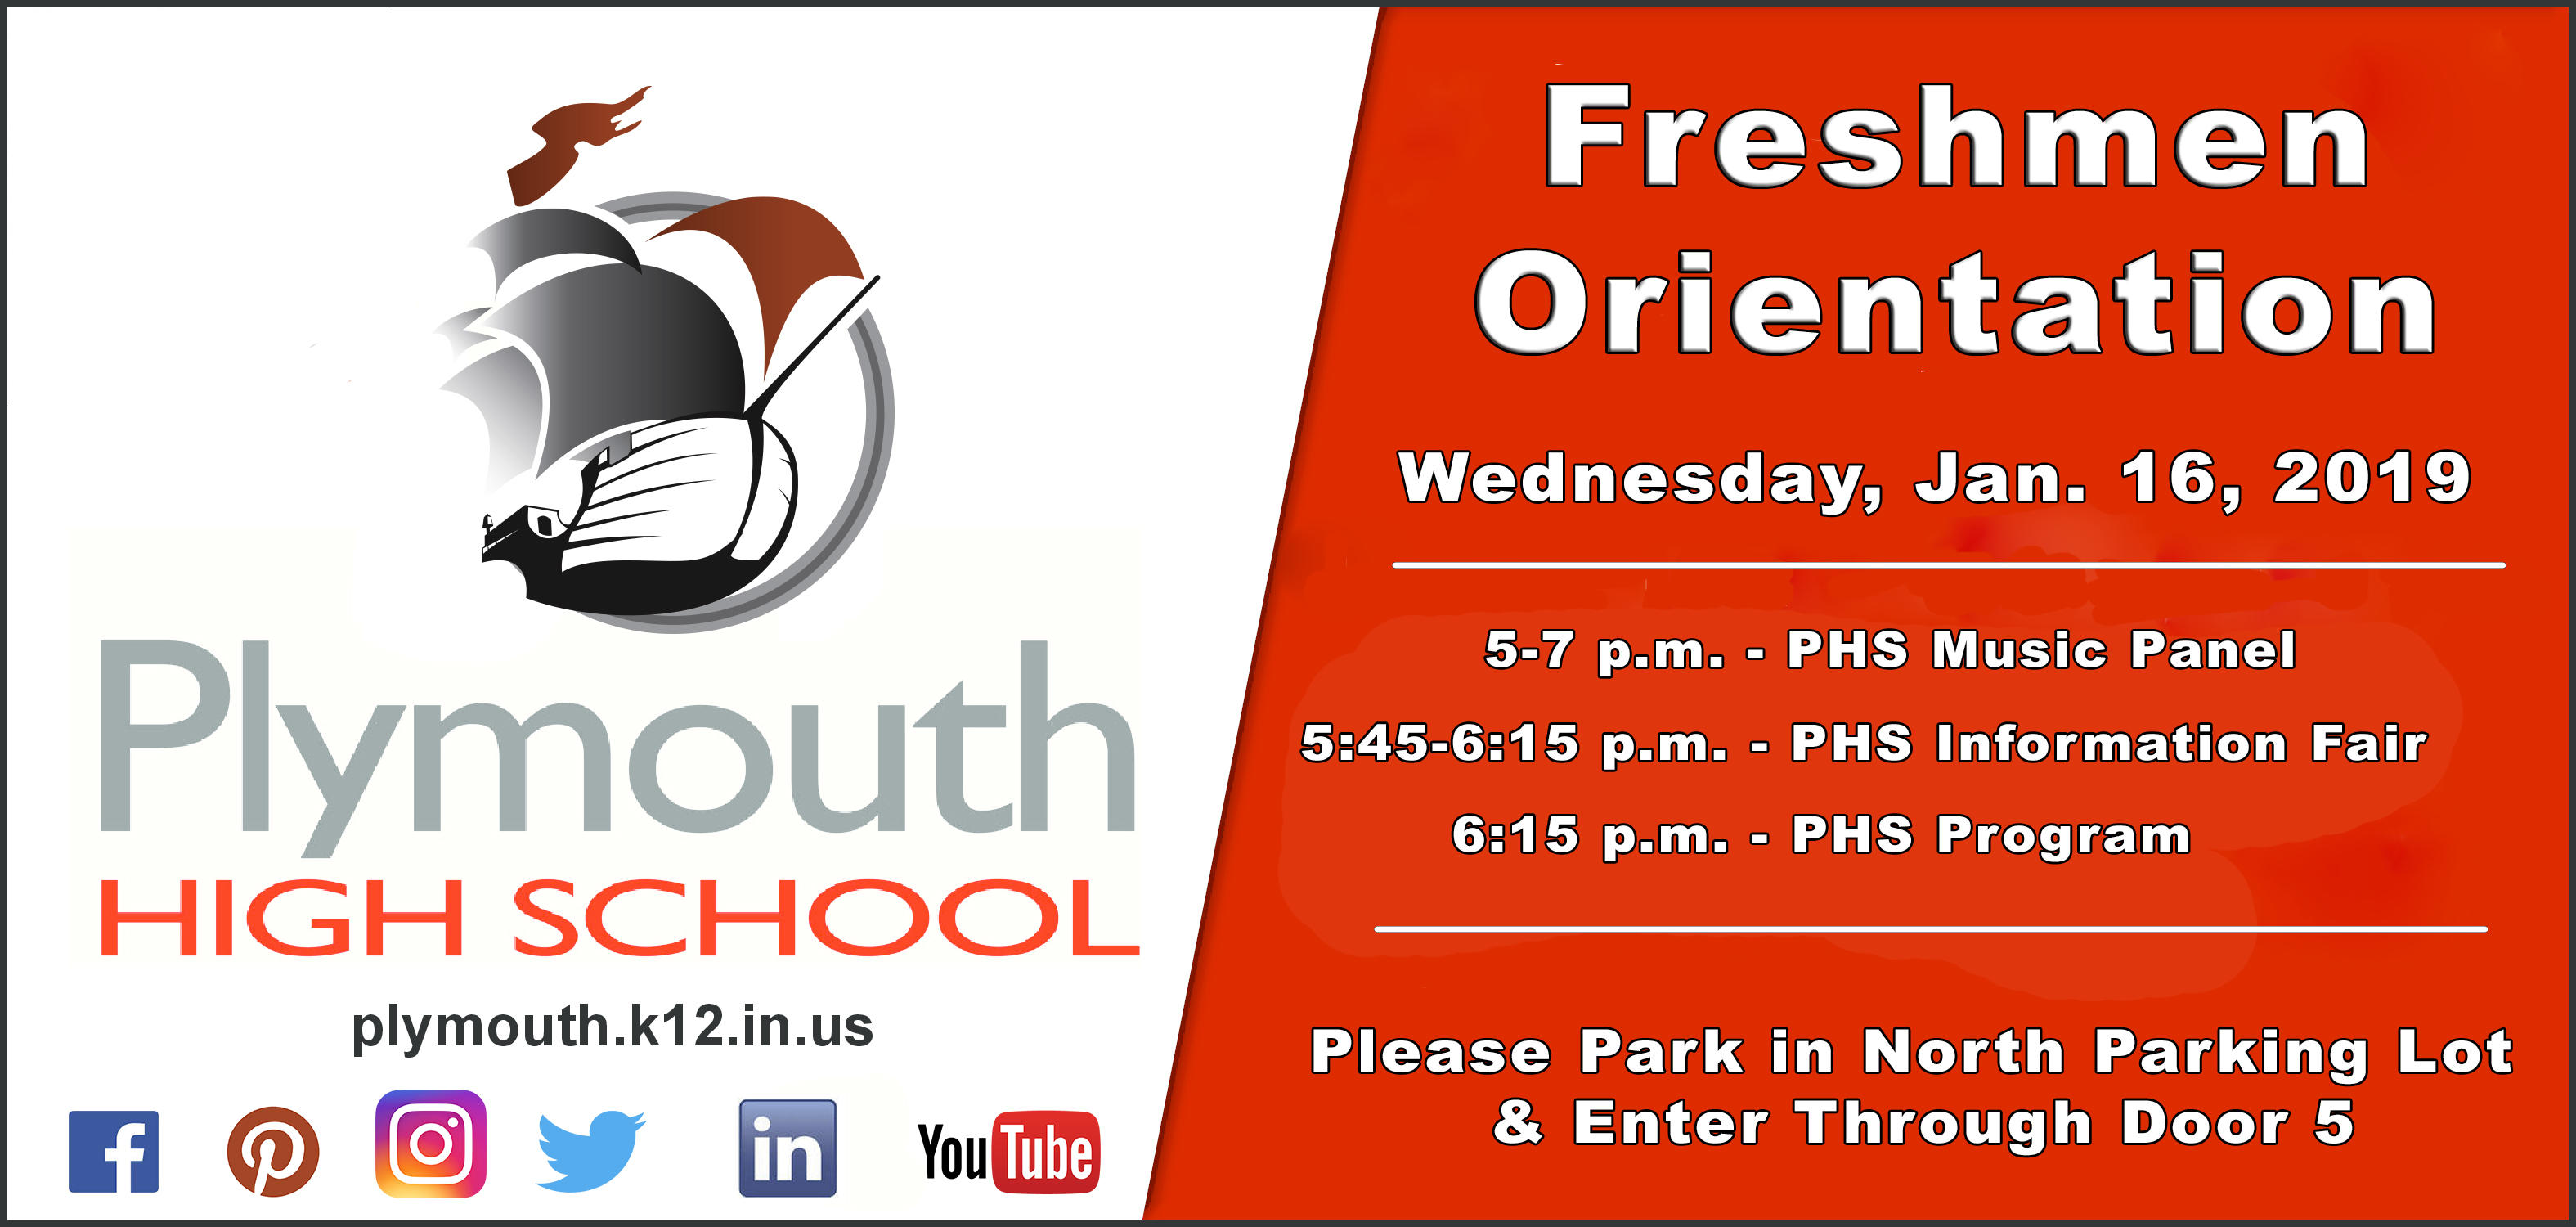 PHS Logo and socail media icons - Freshmen Orientation Wednesday, Jan. 16, 2019, 5-7 p.m. PHS Music Panel, 5:45-6:15 p.m. - PHS Information Fair, 6:15 p.m. - PHS Program, Please park in North Parking Lot & Enter Through Door 5